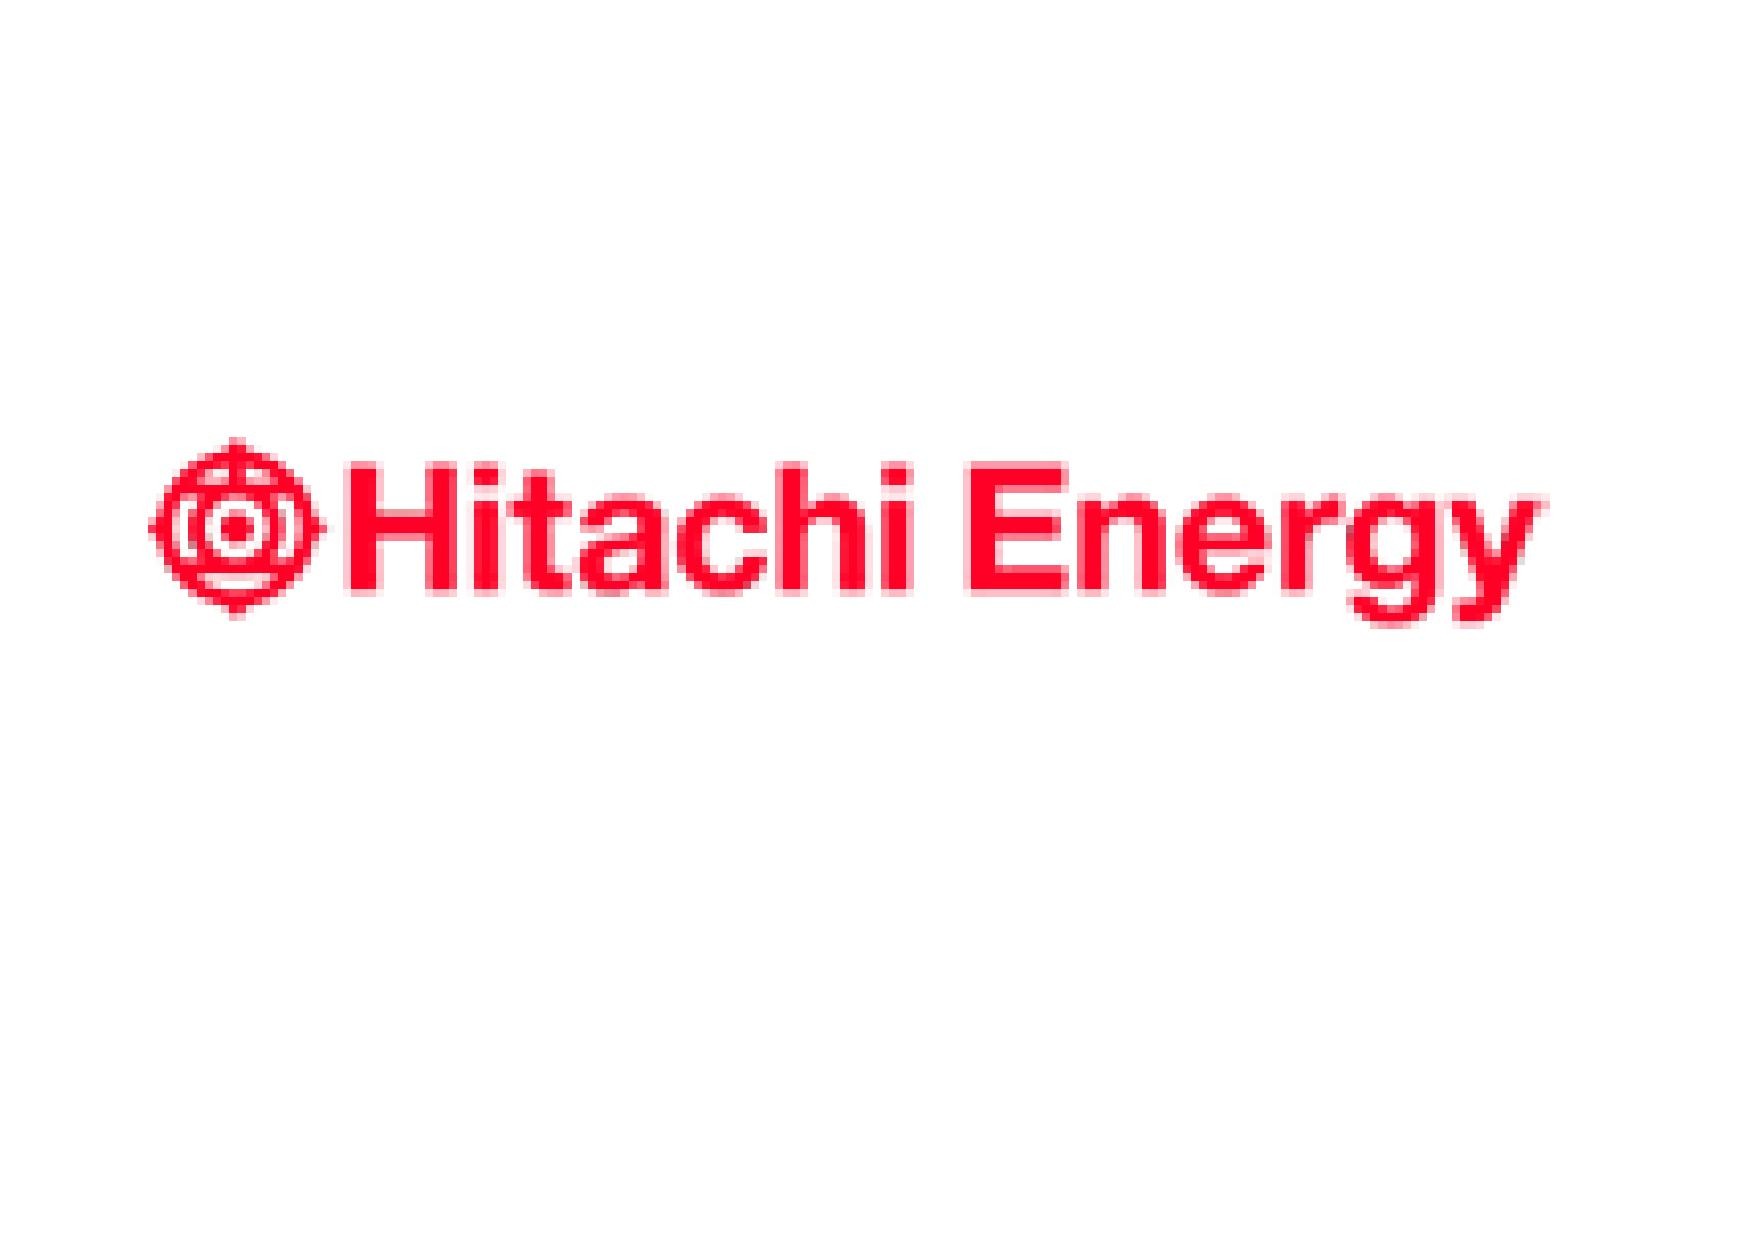 Hitachi Energy Czech Republic s.r.o.